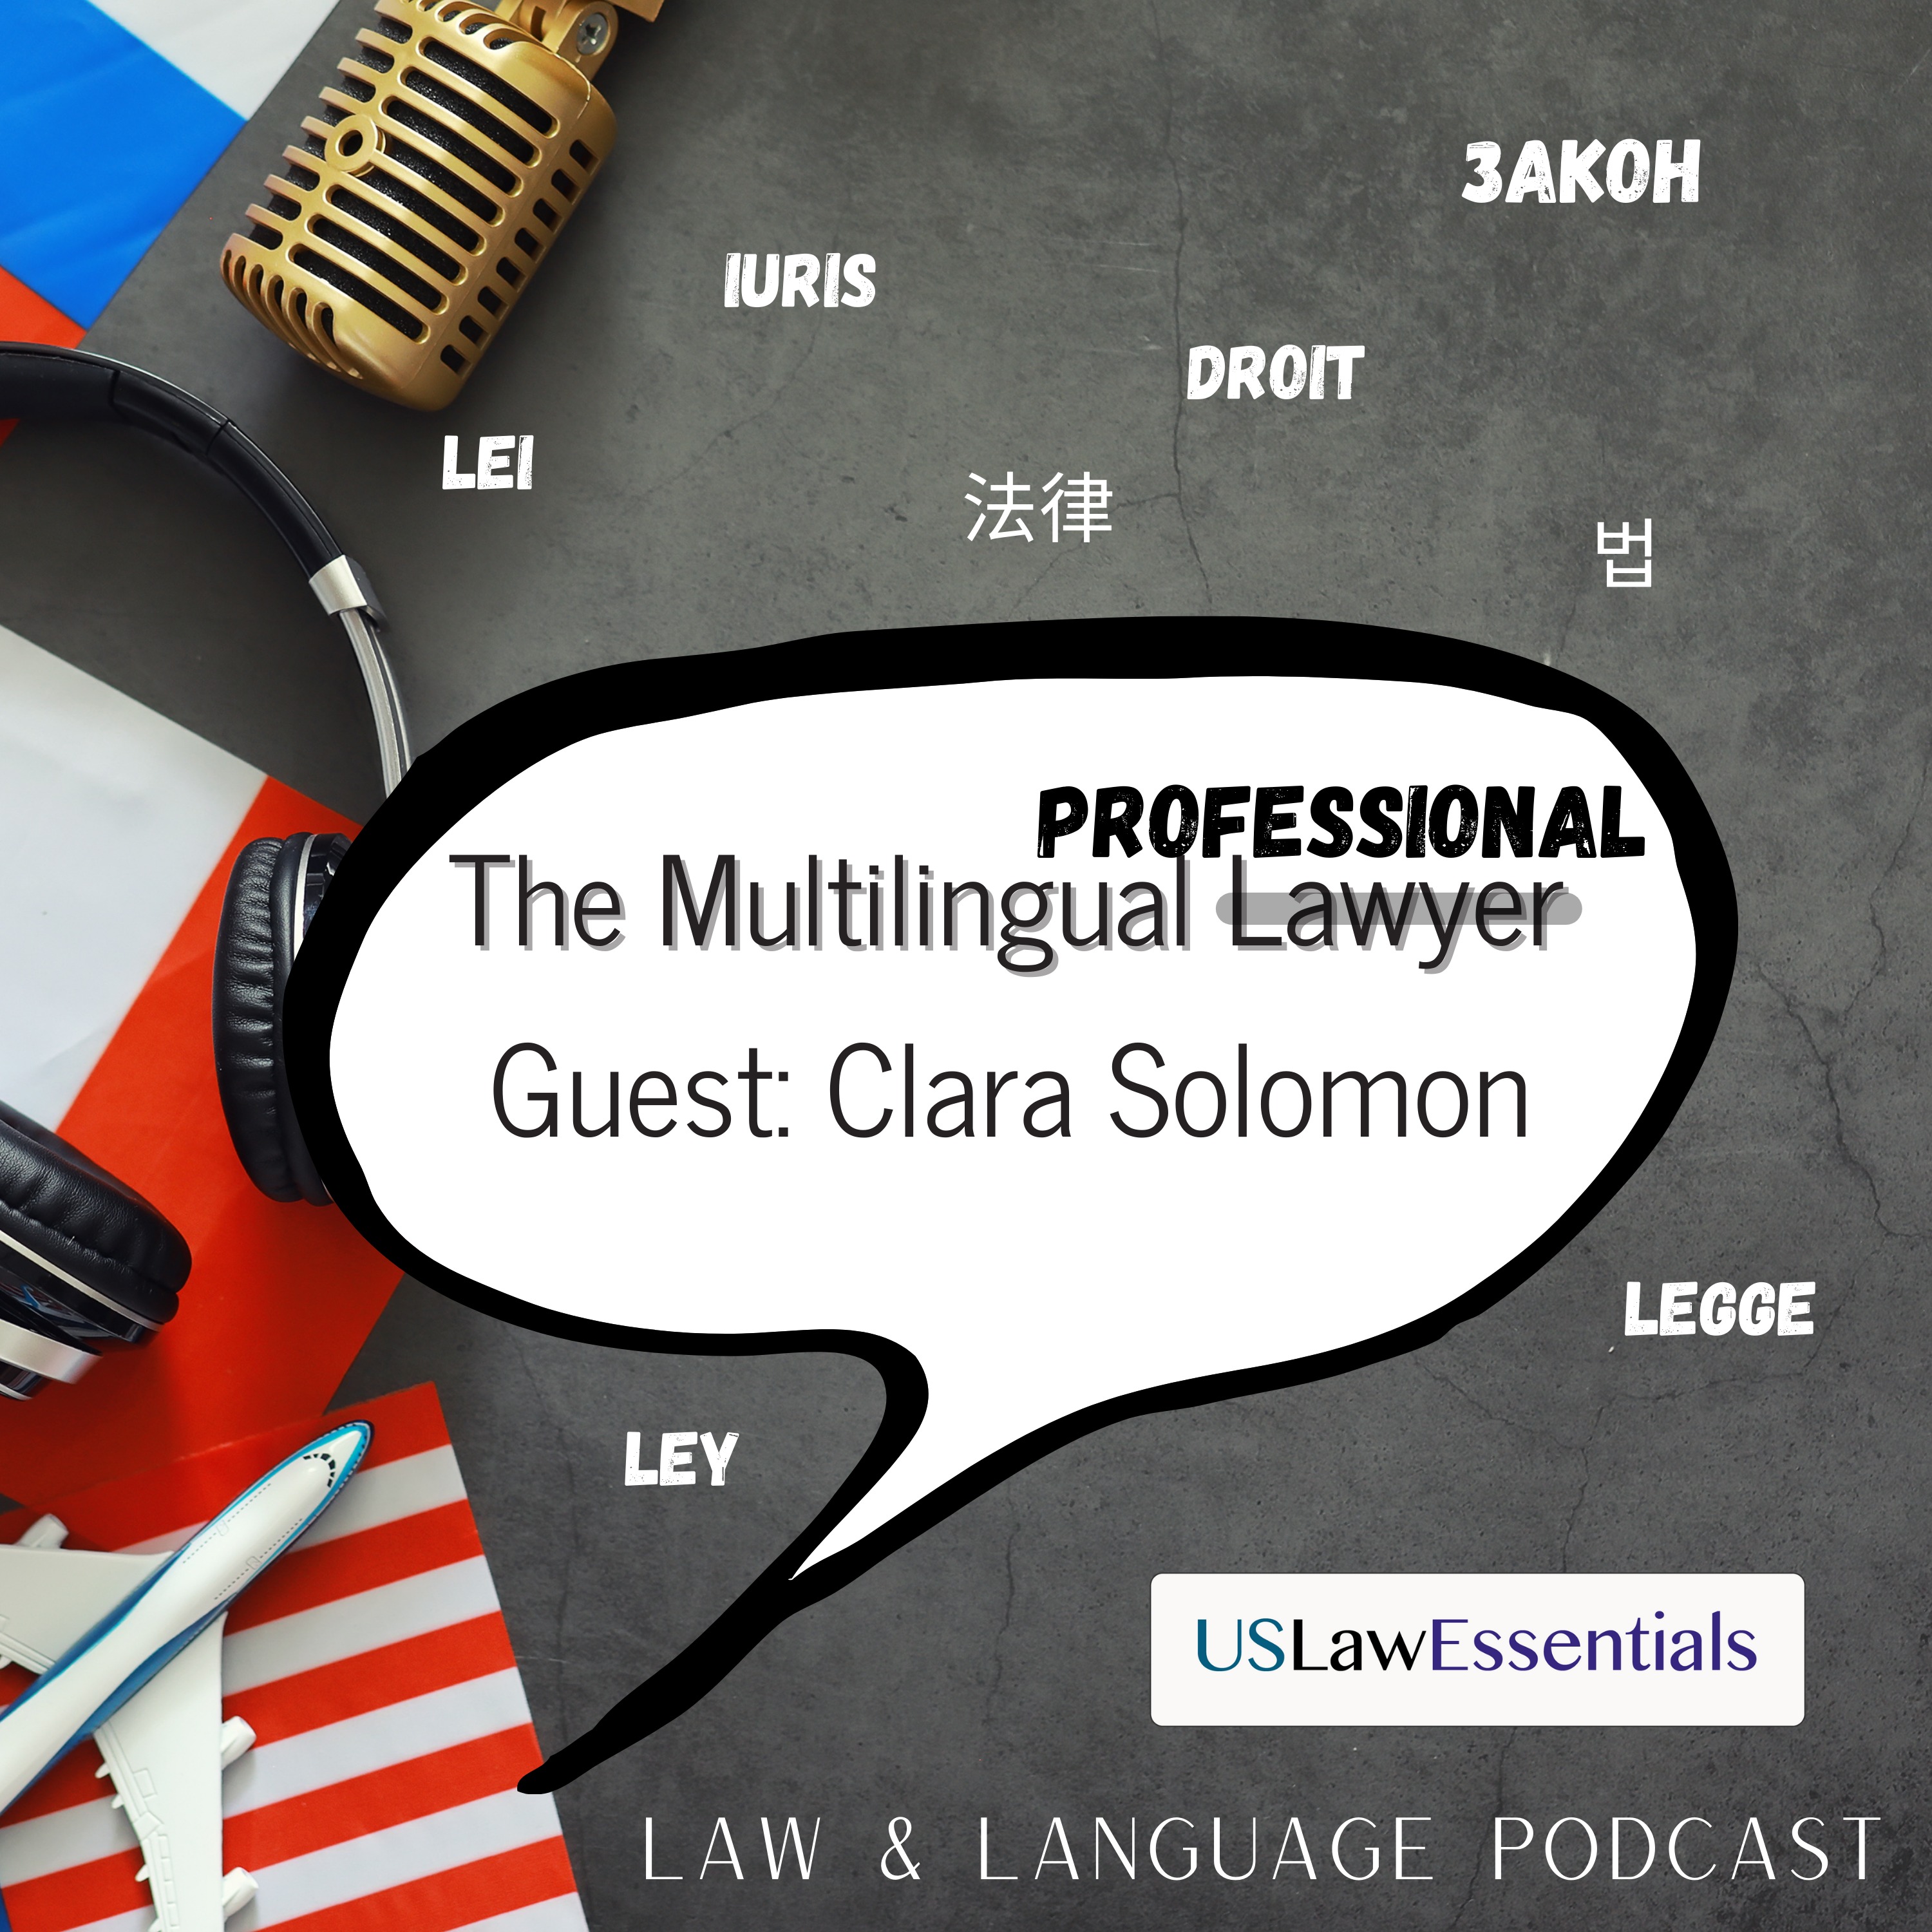 Interview with Clara Solomon